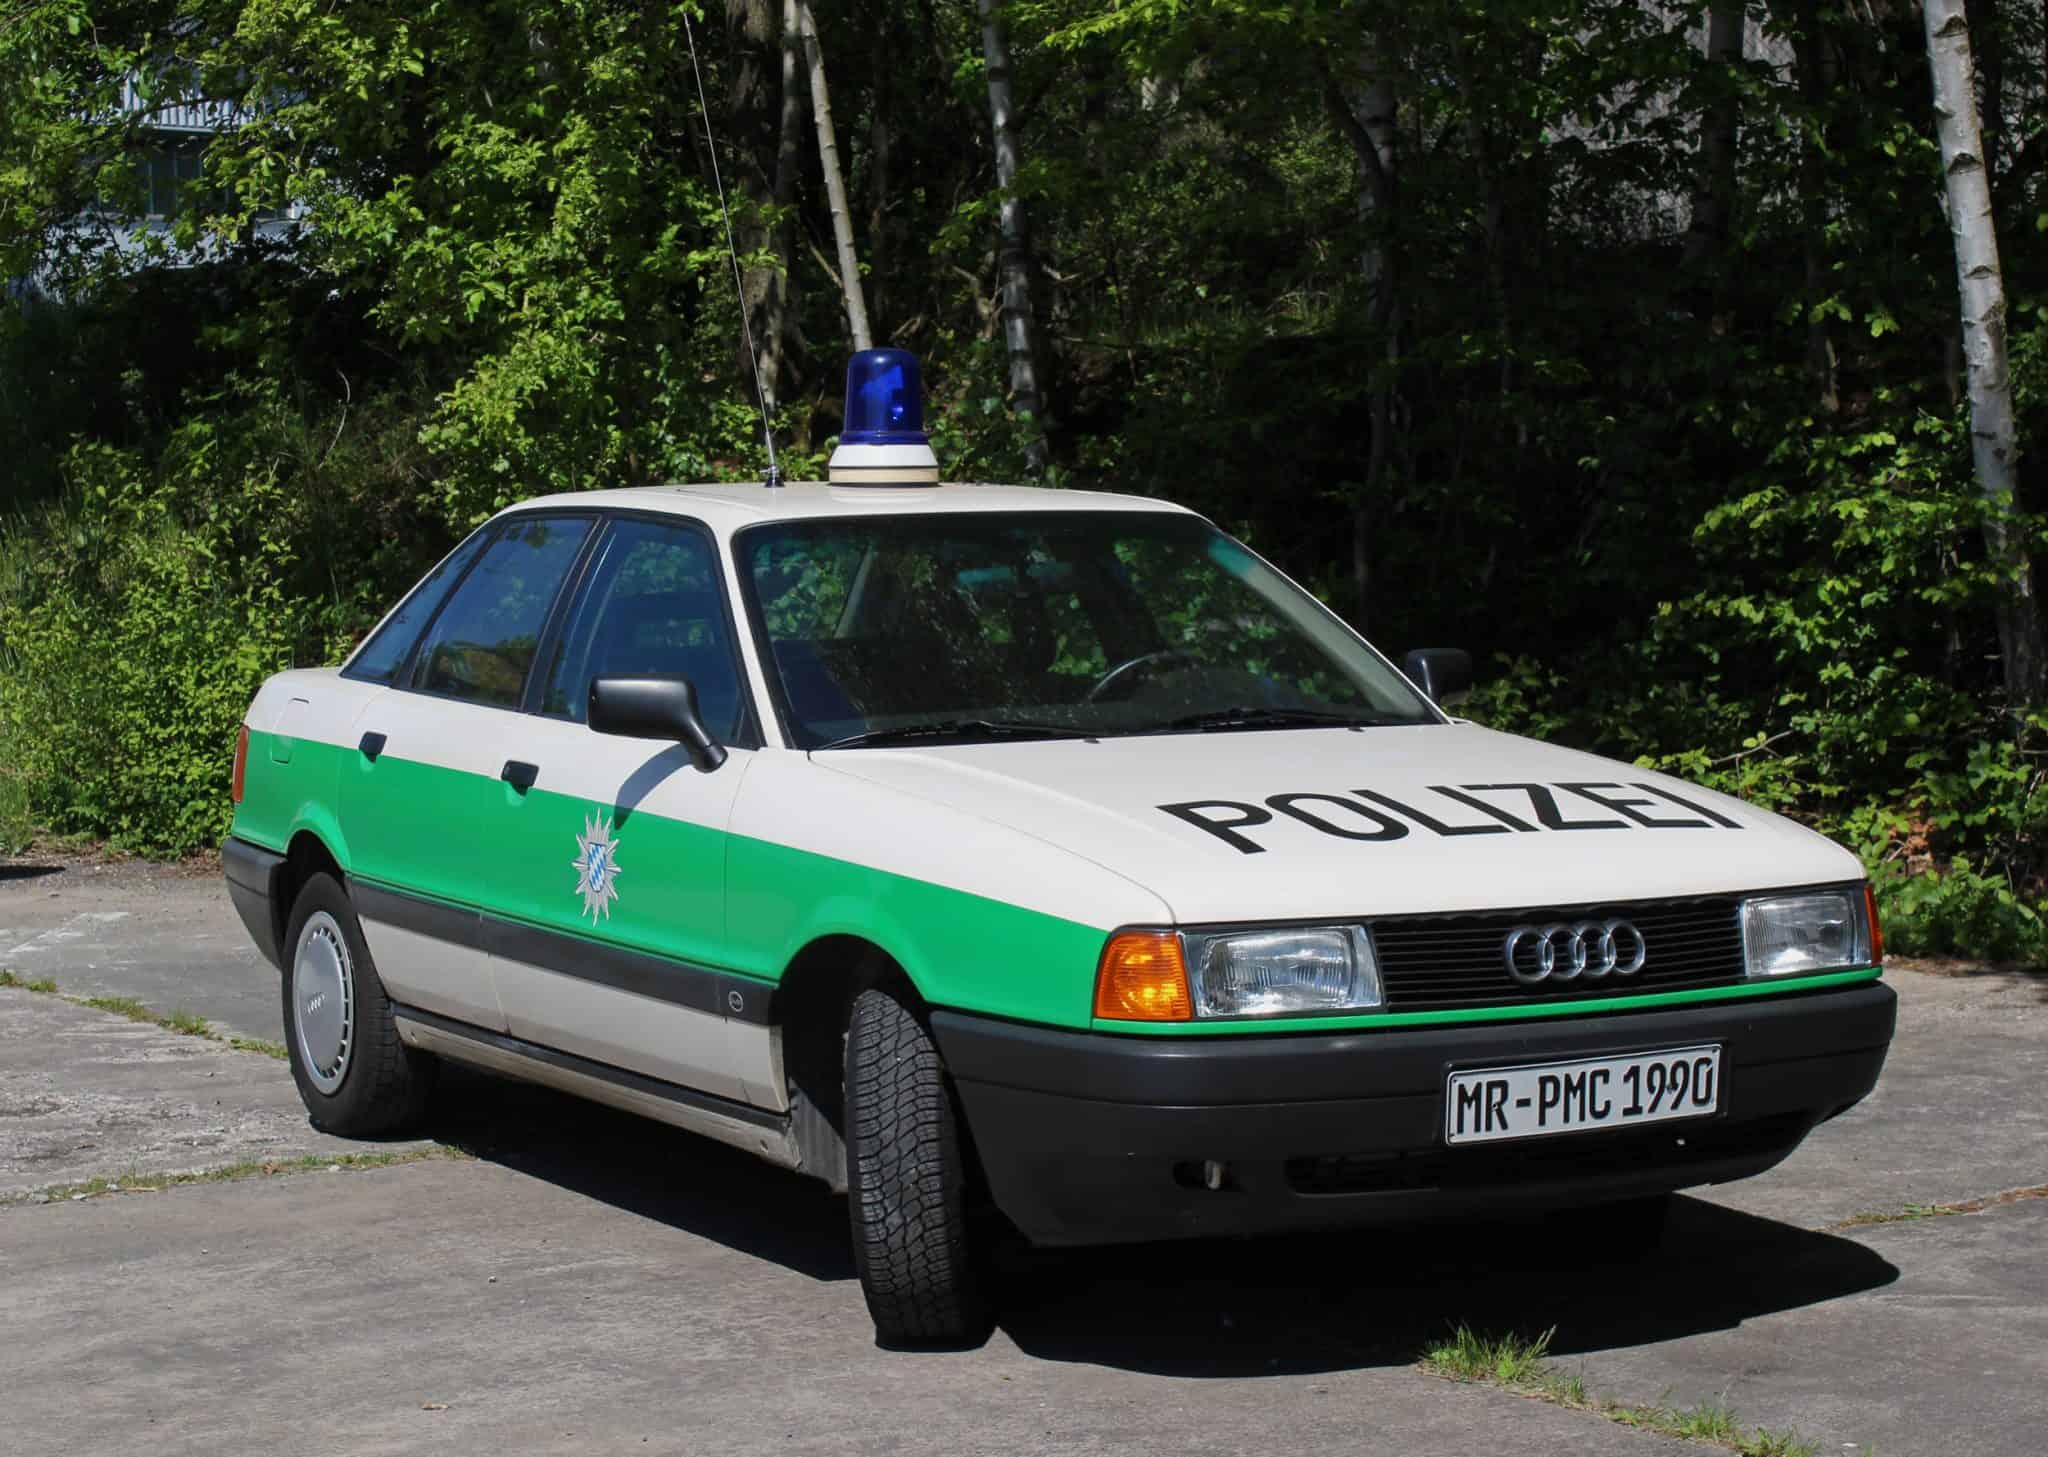 Audi 80 | Polizei-Motorsport-Club Marburg 1990 e.V.